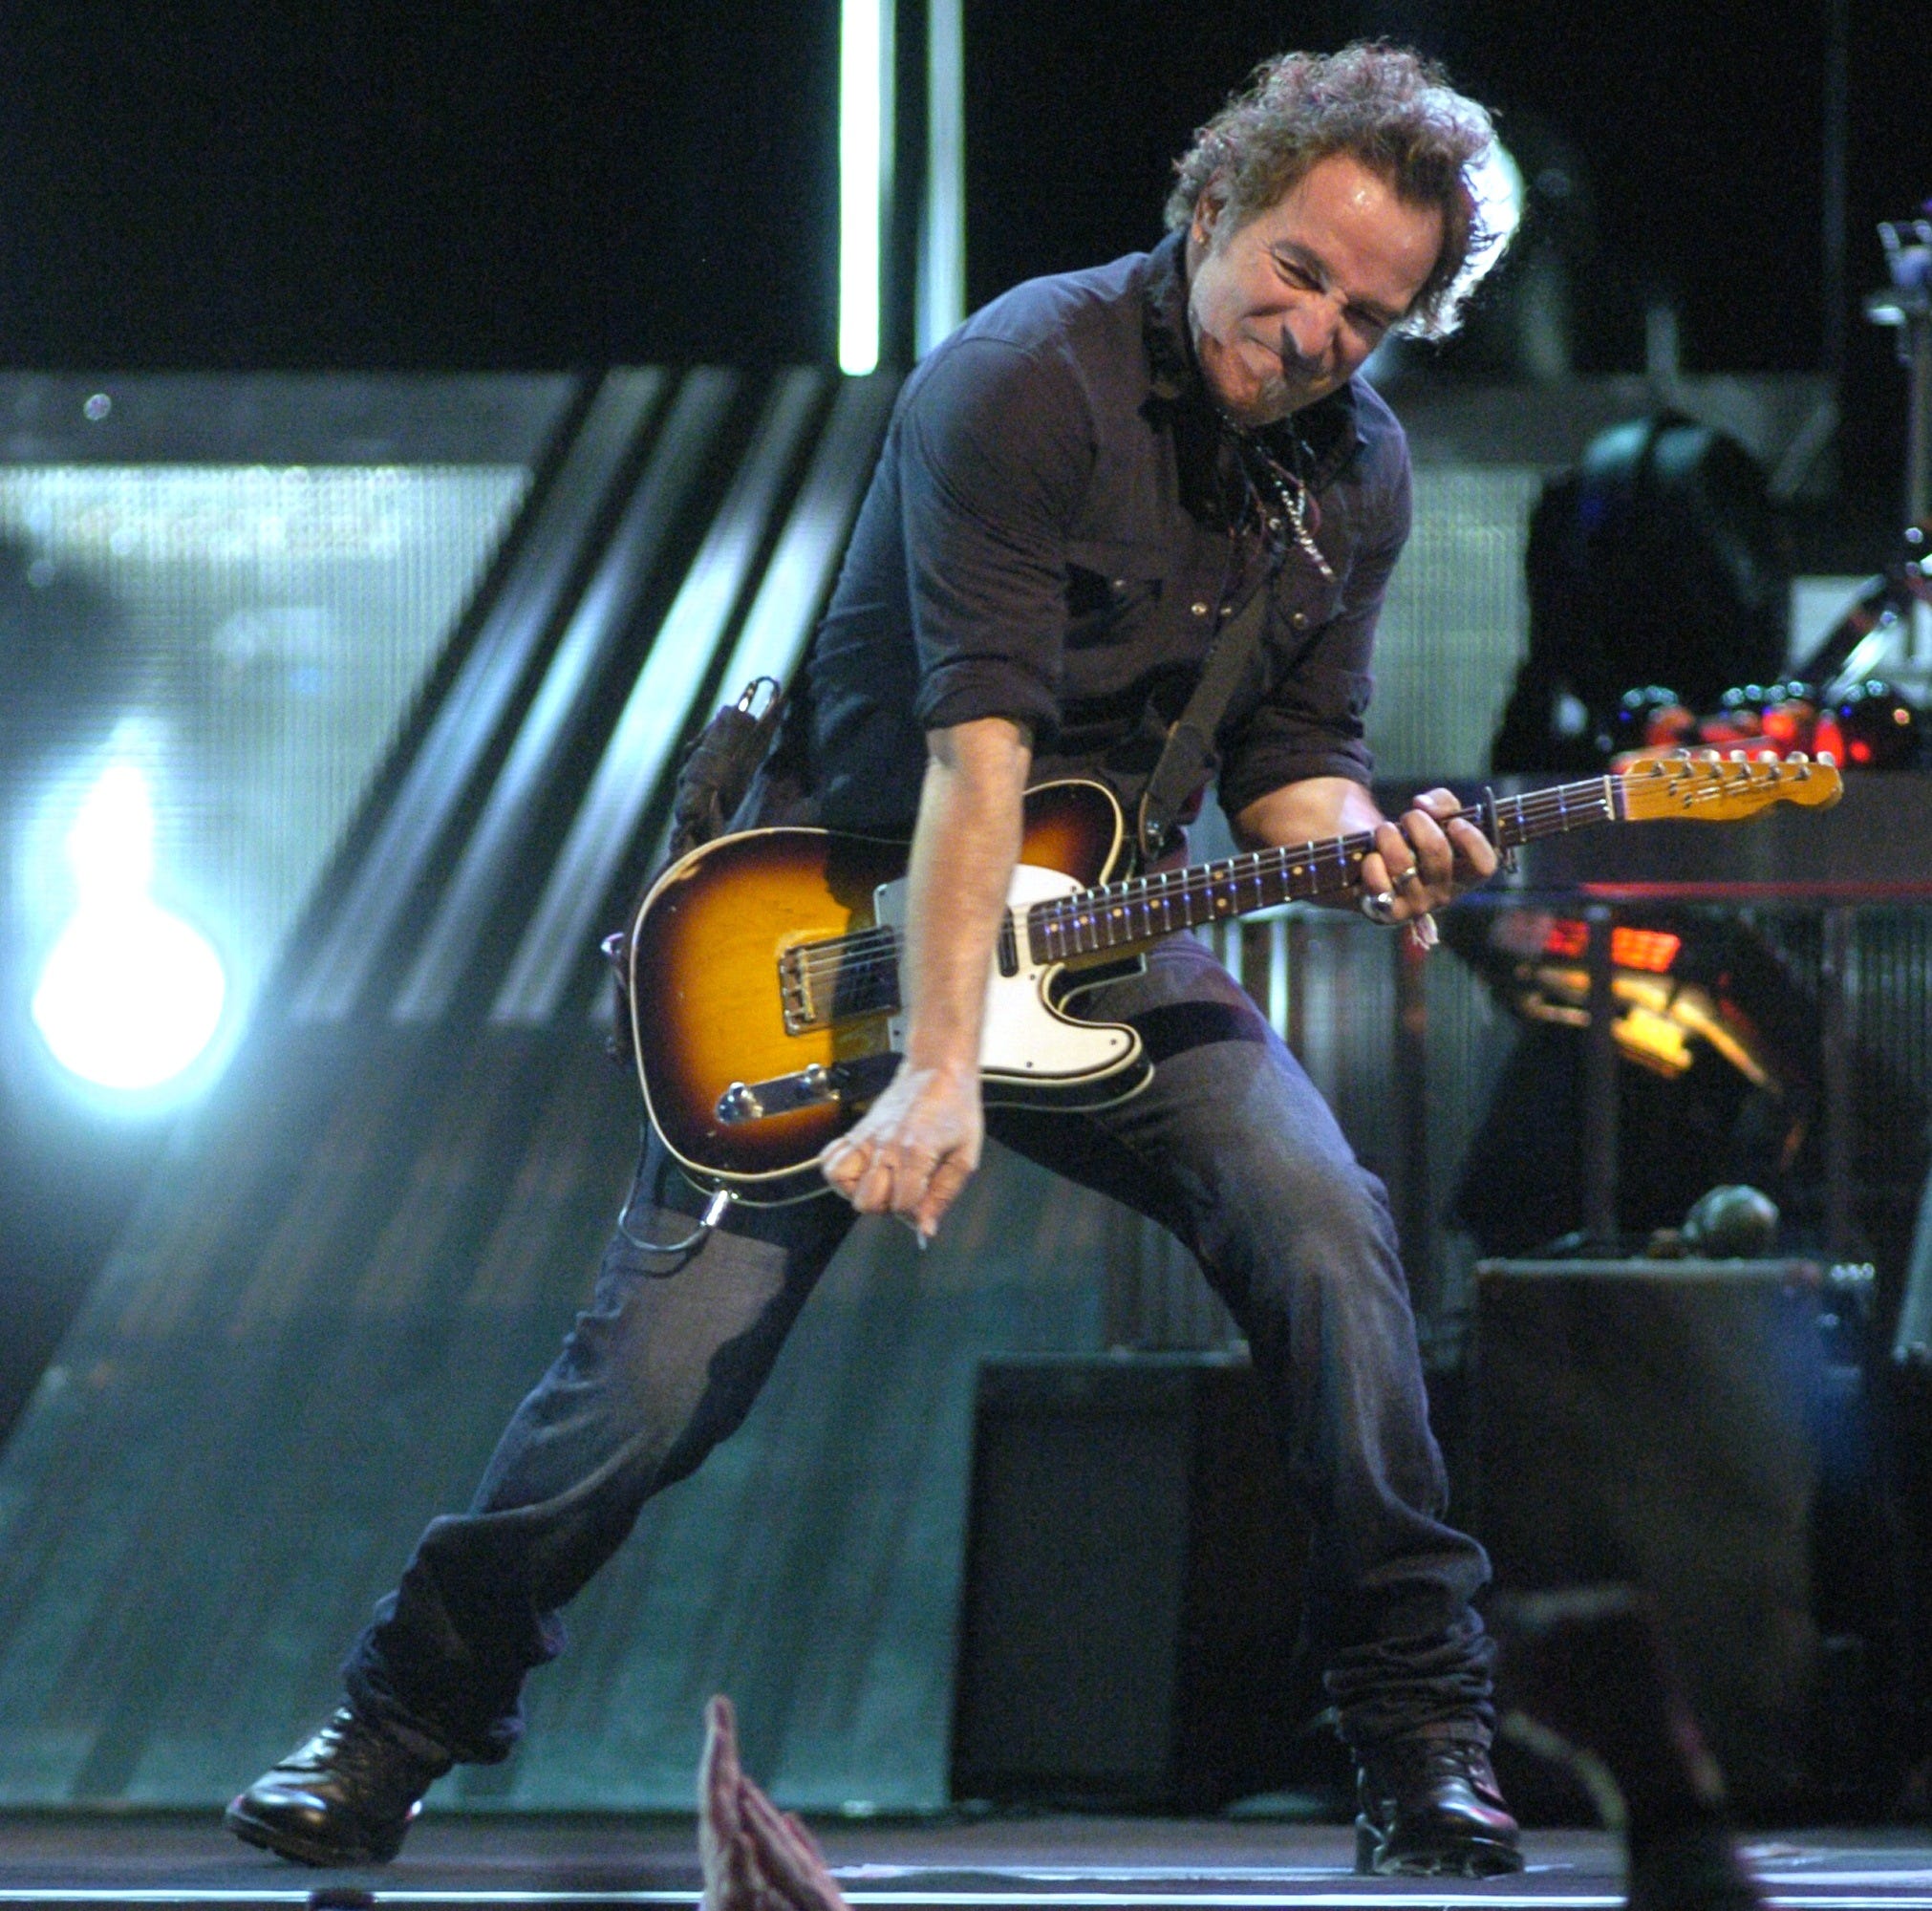 Viskeus antiek Sandalen DVD REVIEW: 'London Calling' finds Springsteen at his best